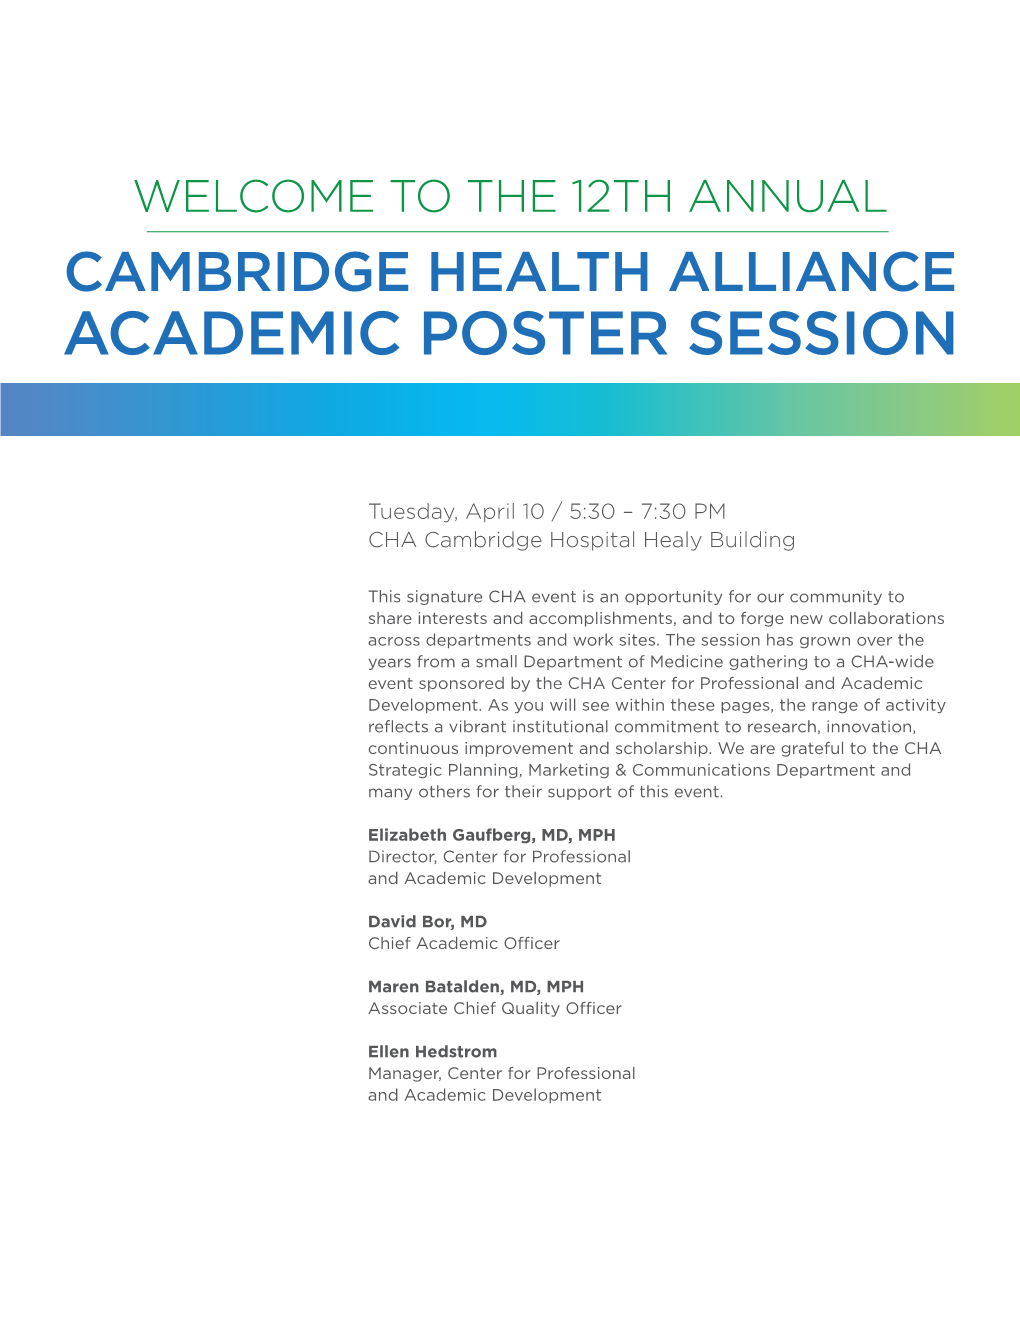 Cambridge Health Alliance Academic Poster Session